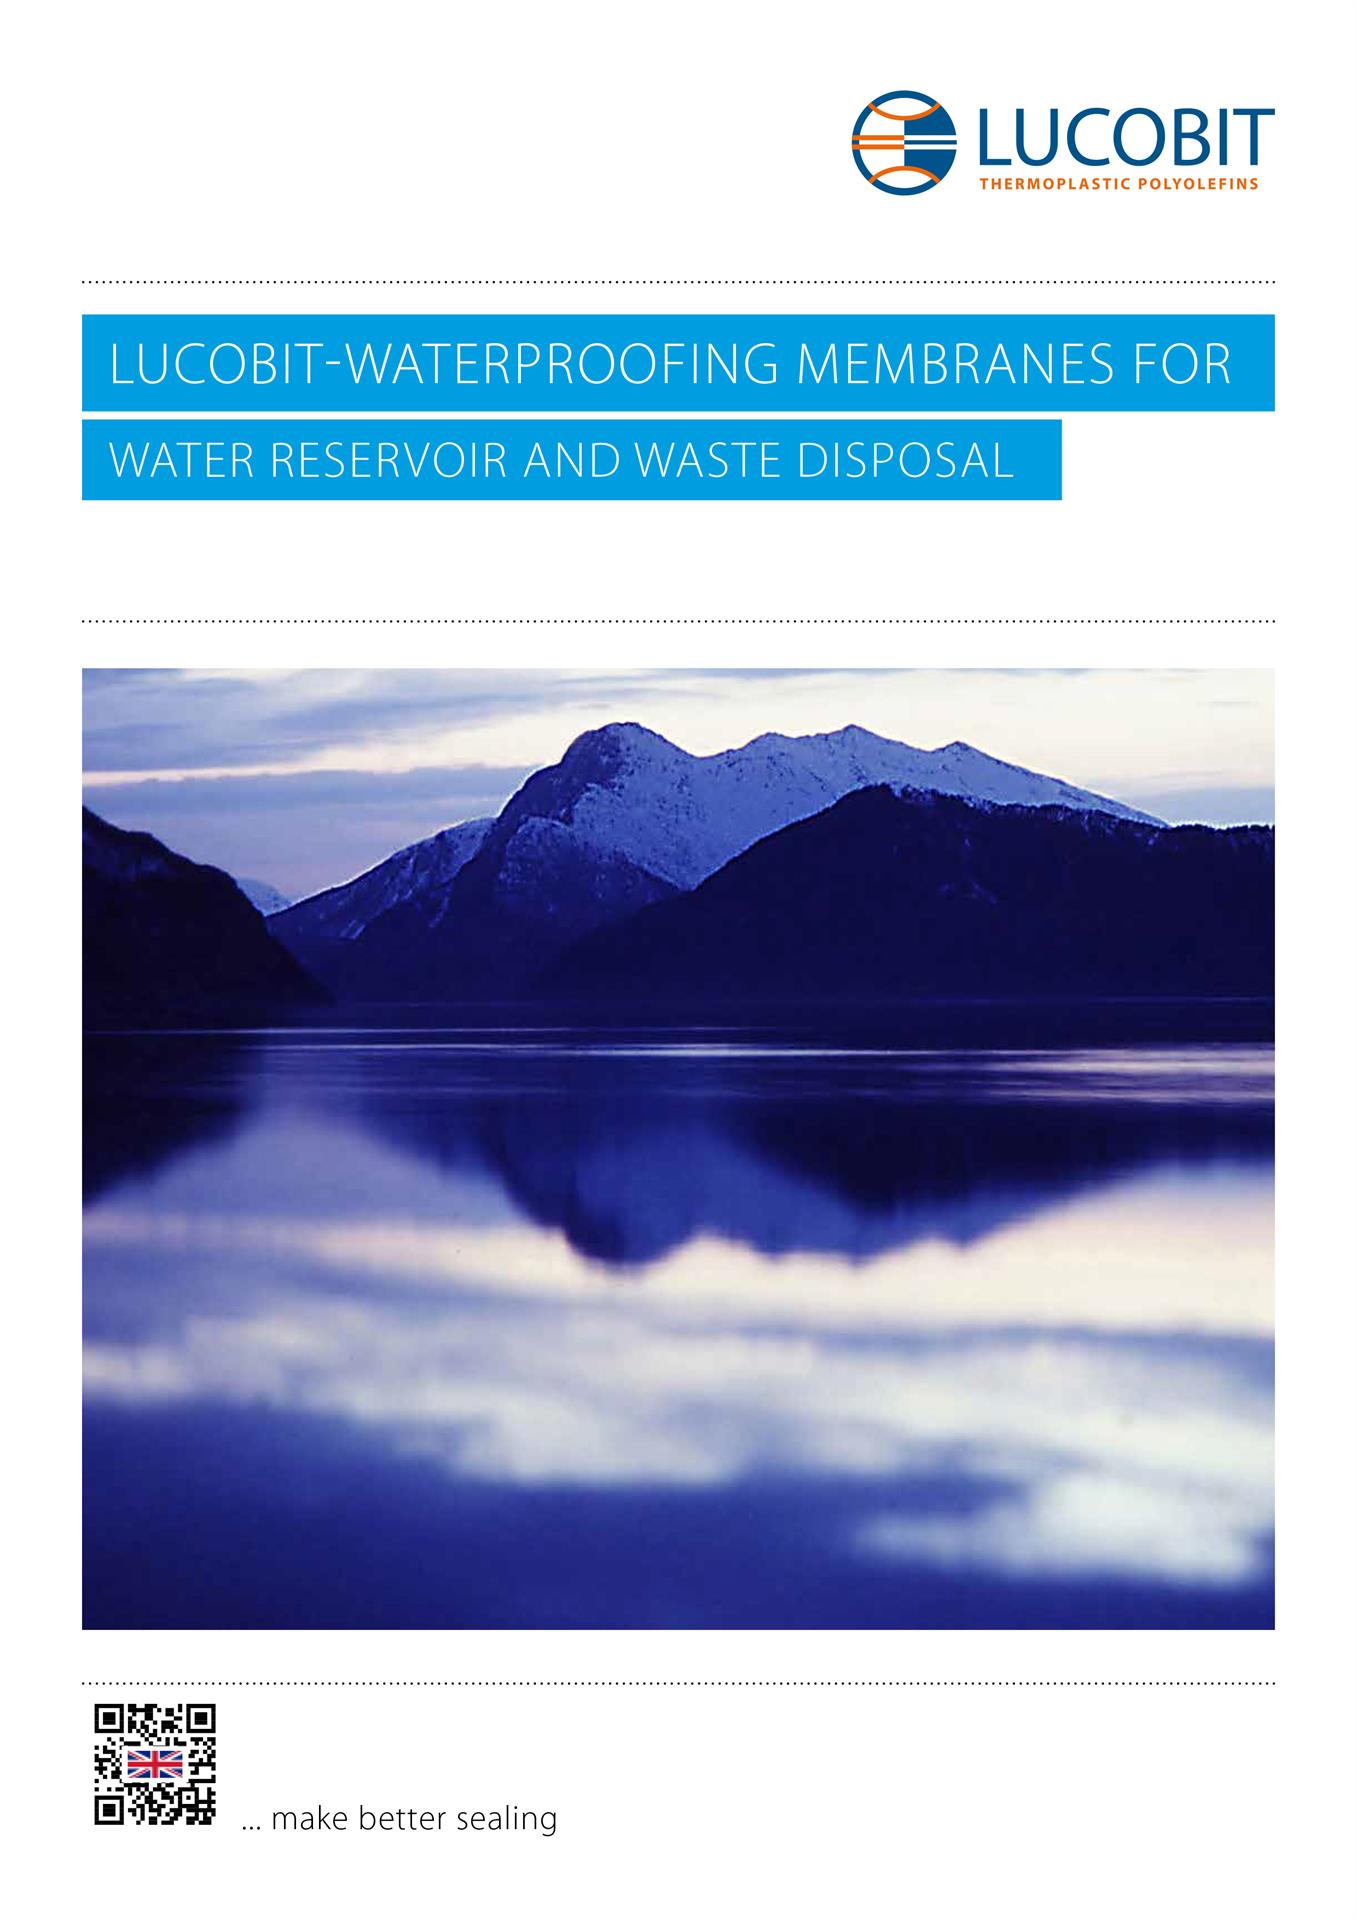 LUCOBIT Brochure - LUCOBIT-WATERPROOFING MEMBRANES FOR WATER RESERVOIR DISPOSAL